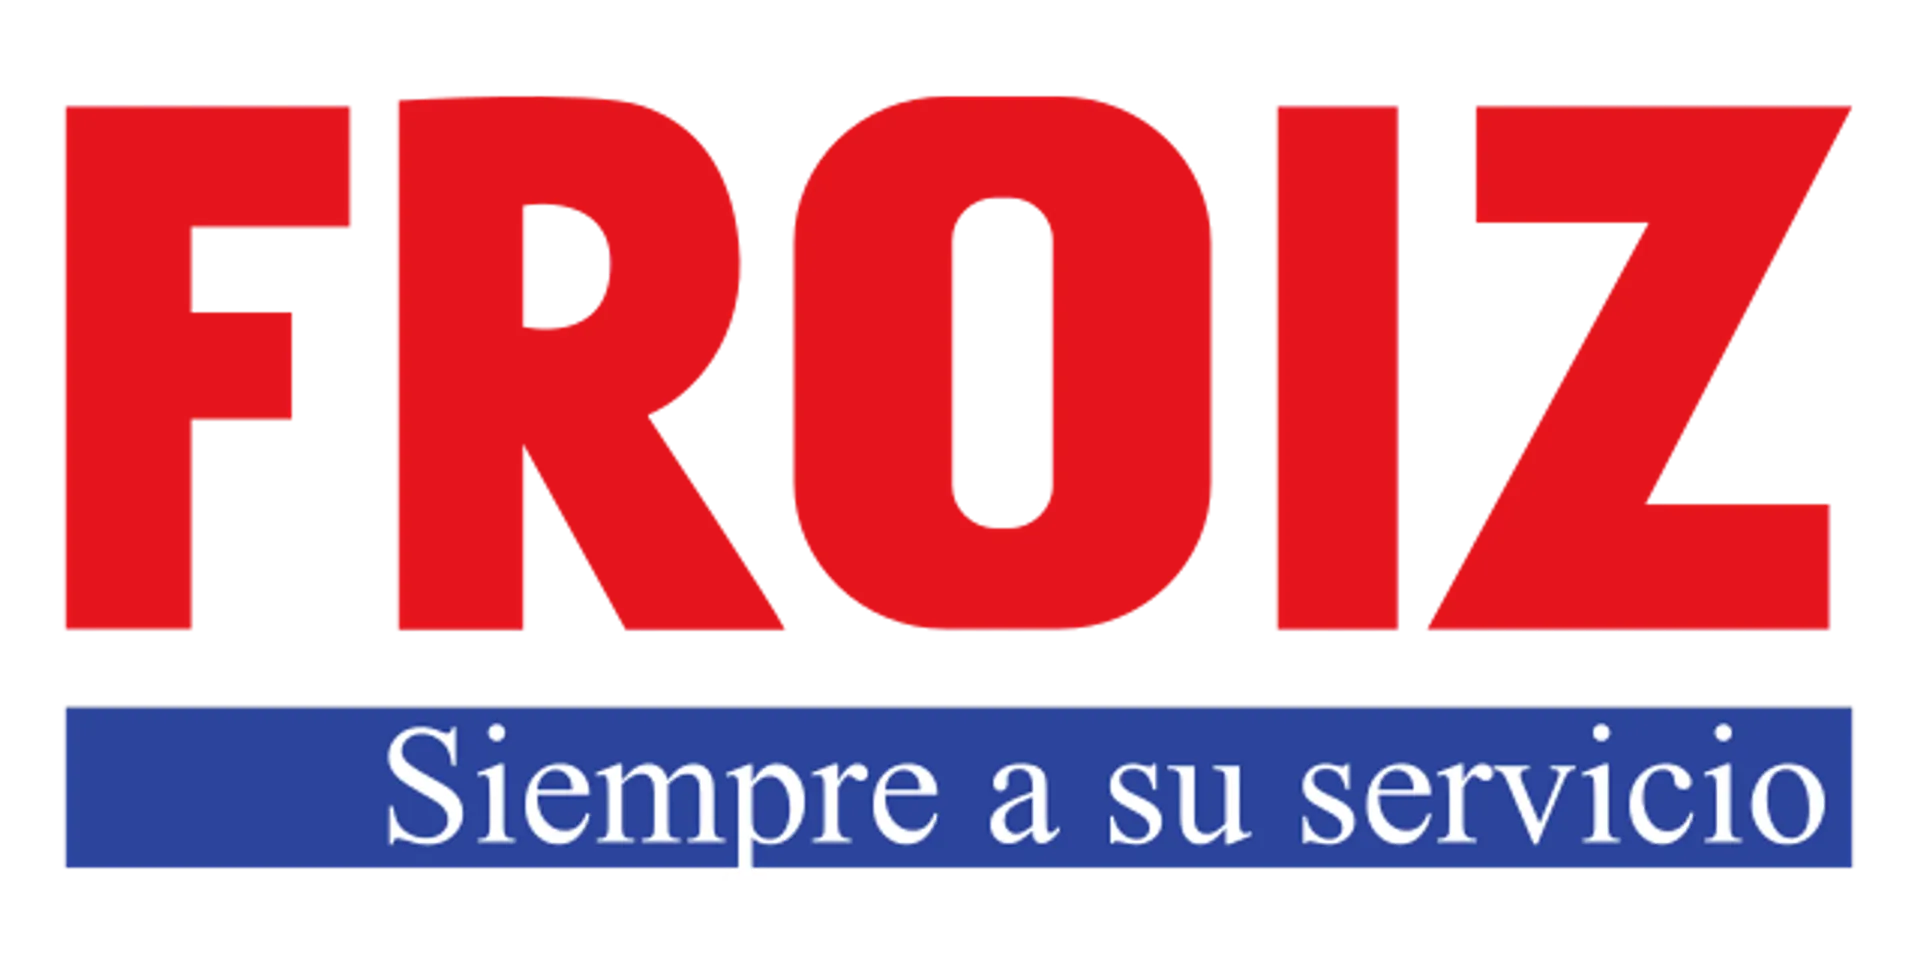 Froiz logo